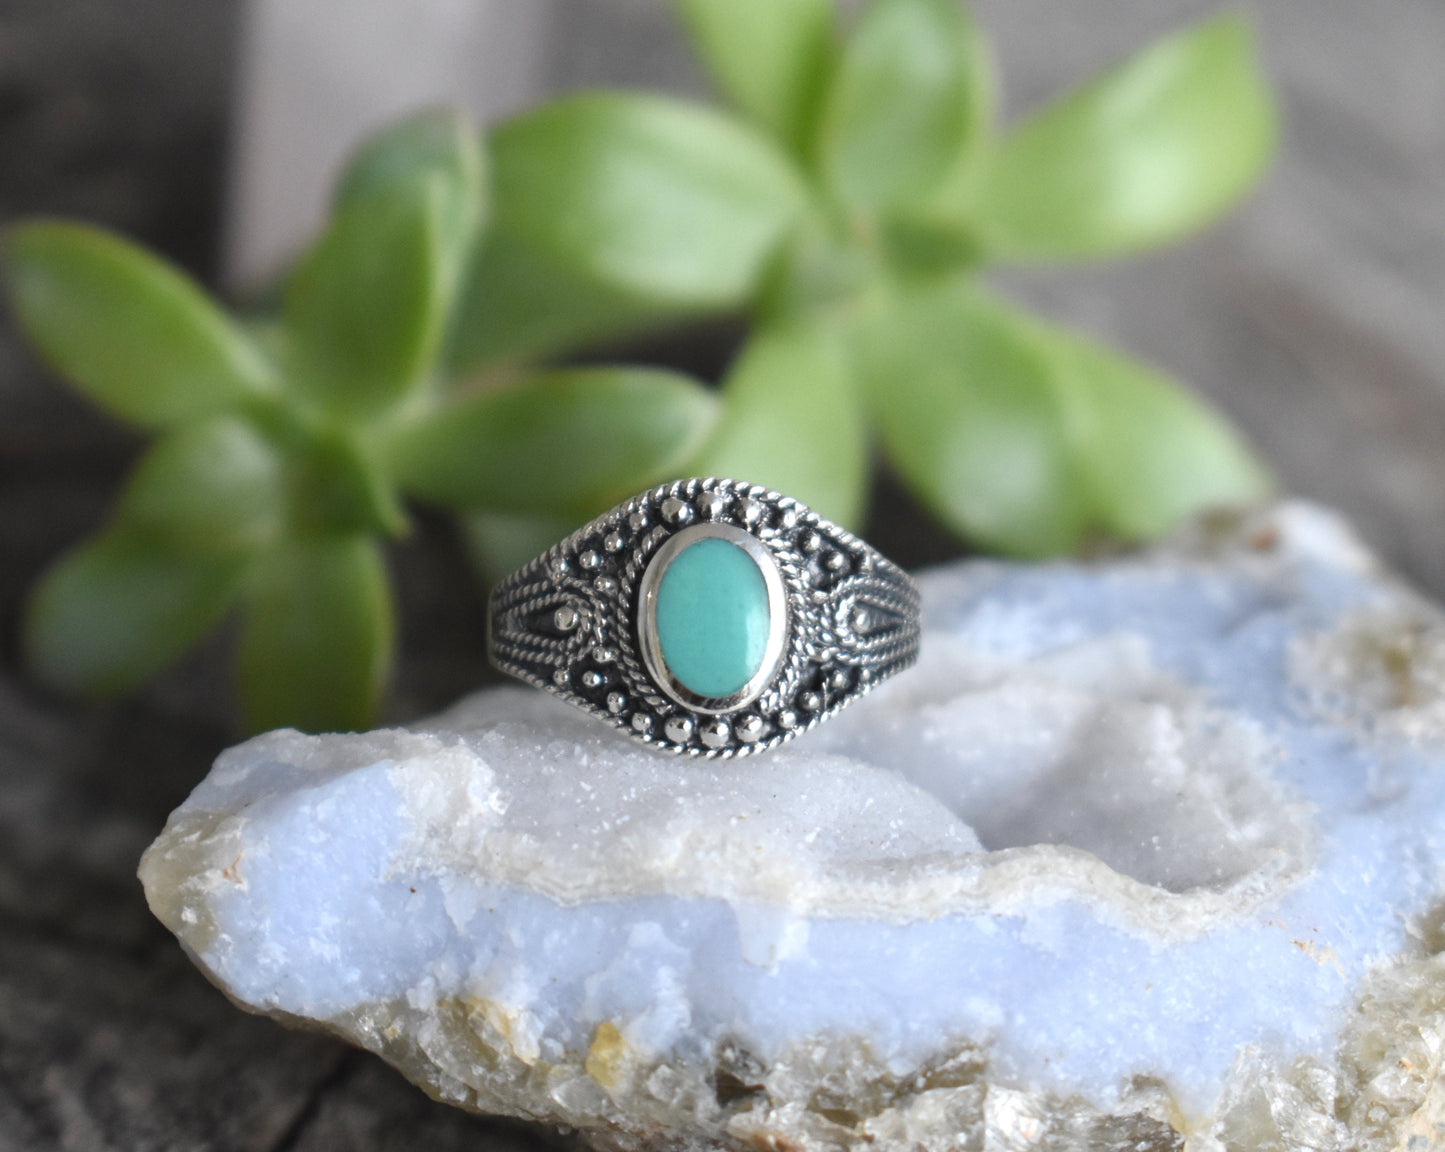 Bali Turquoise Ring- Natural Turquoise Ring, December Birthstone Ring- Silver Ring